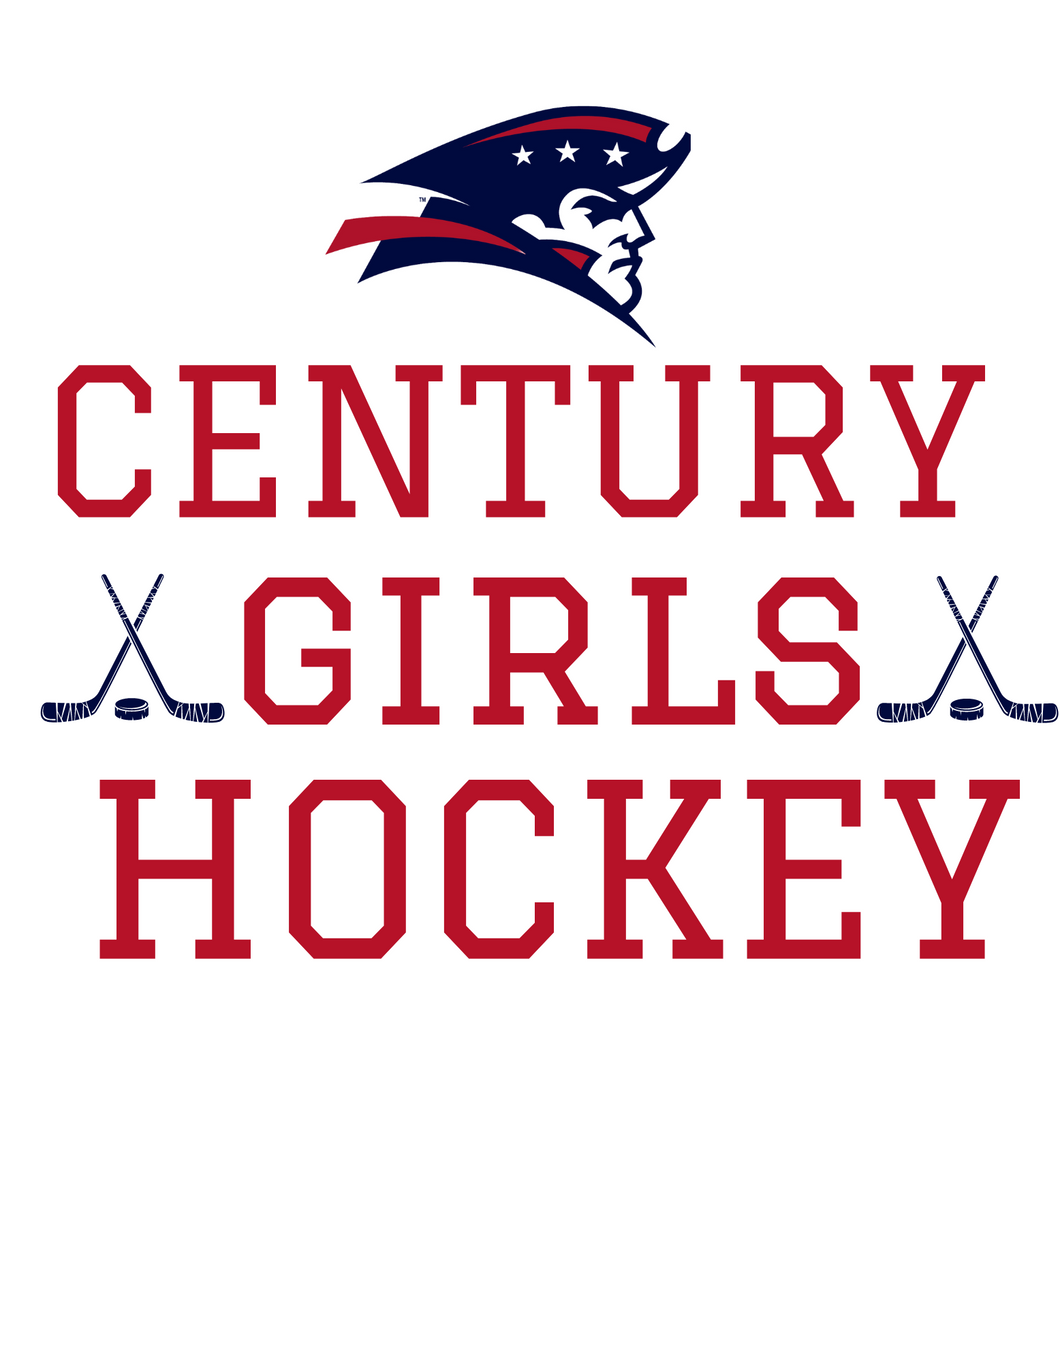 CHS Girls Hockey - T-shirt